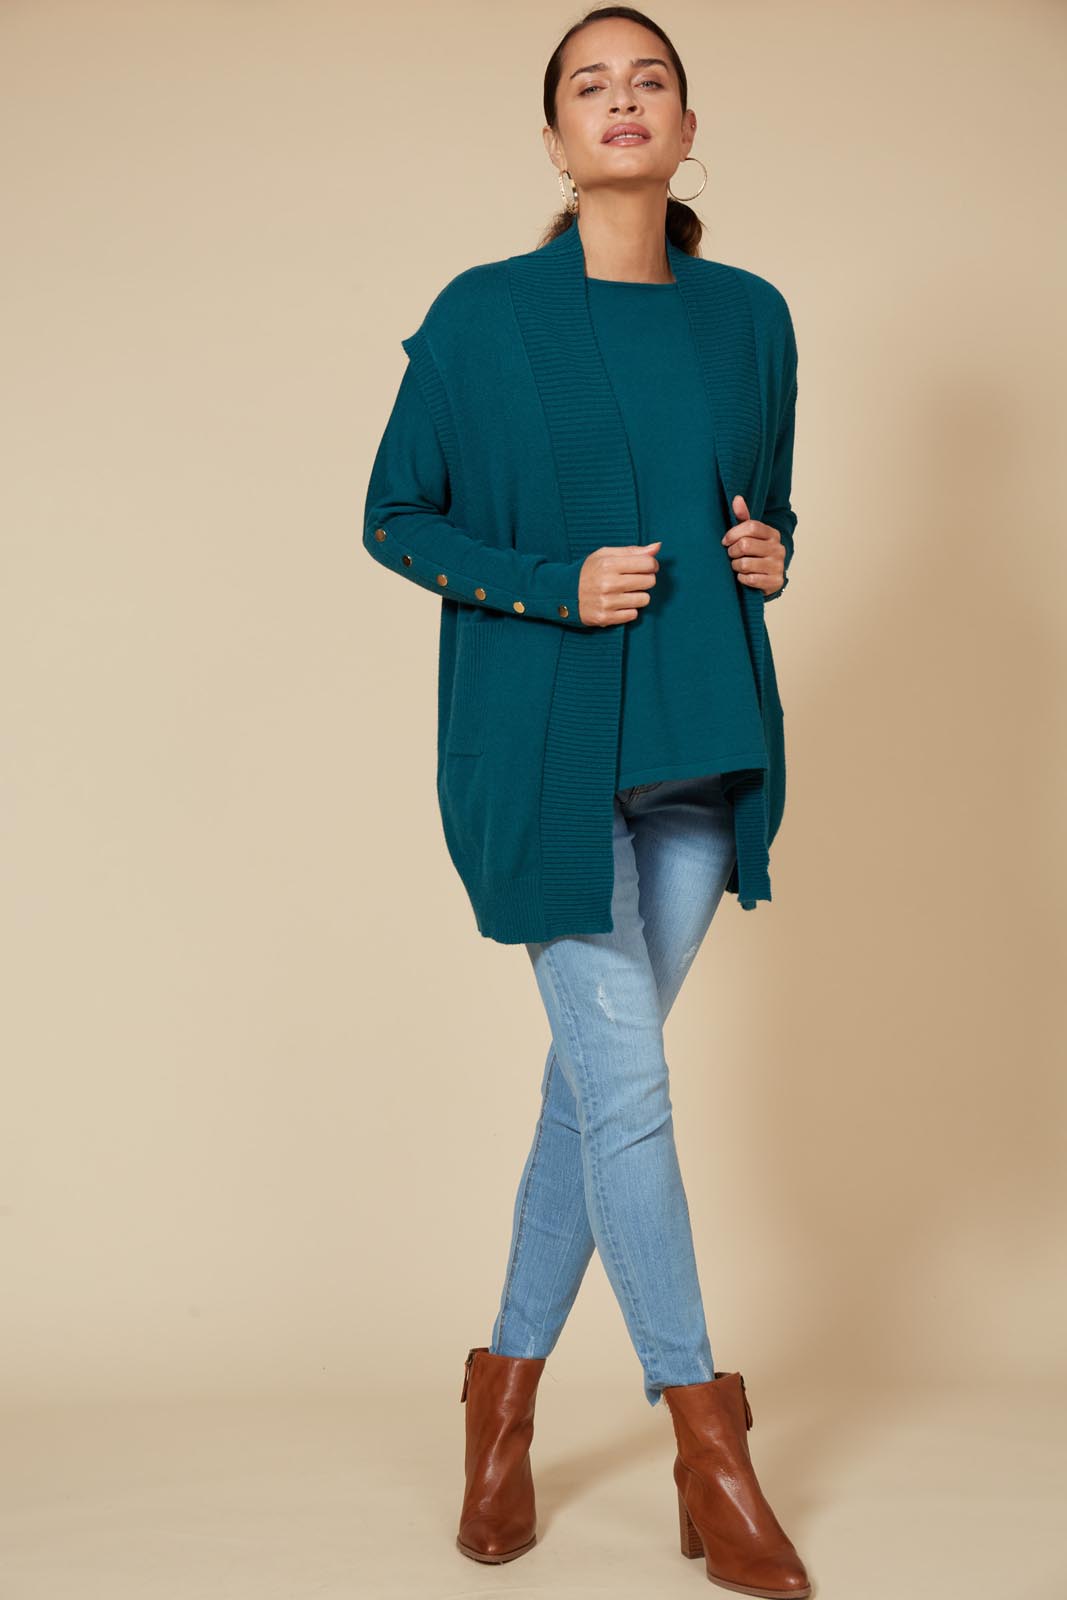 Kit Vest - Teal - eb&ive Clothing - Knit Vest One Size